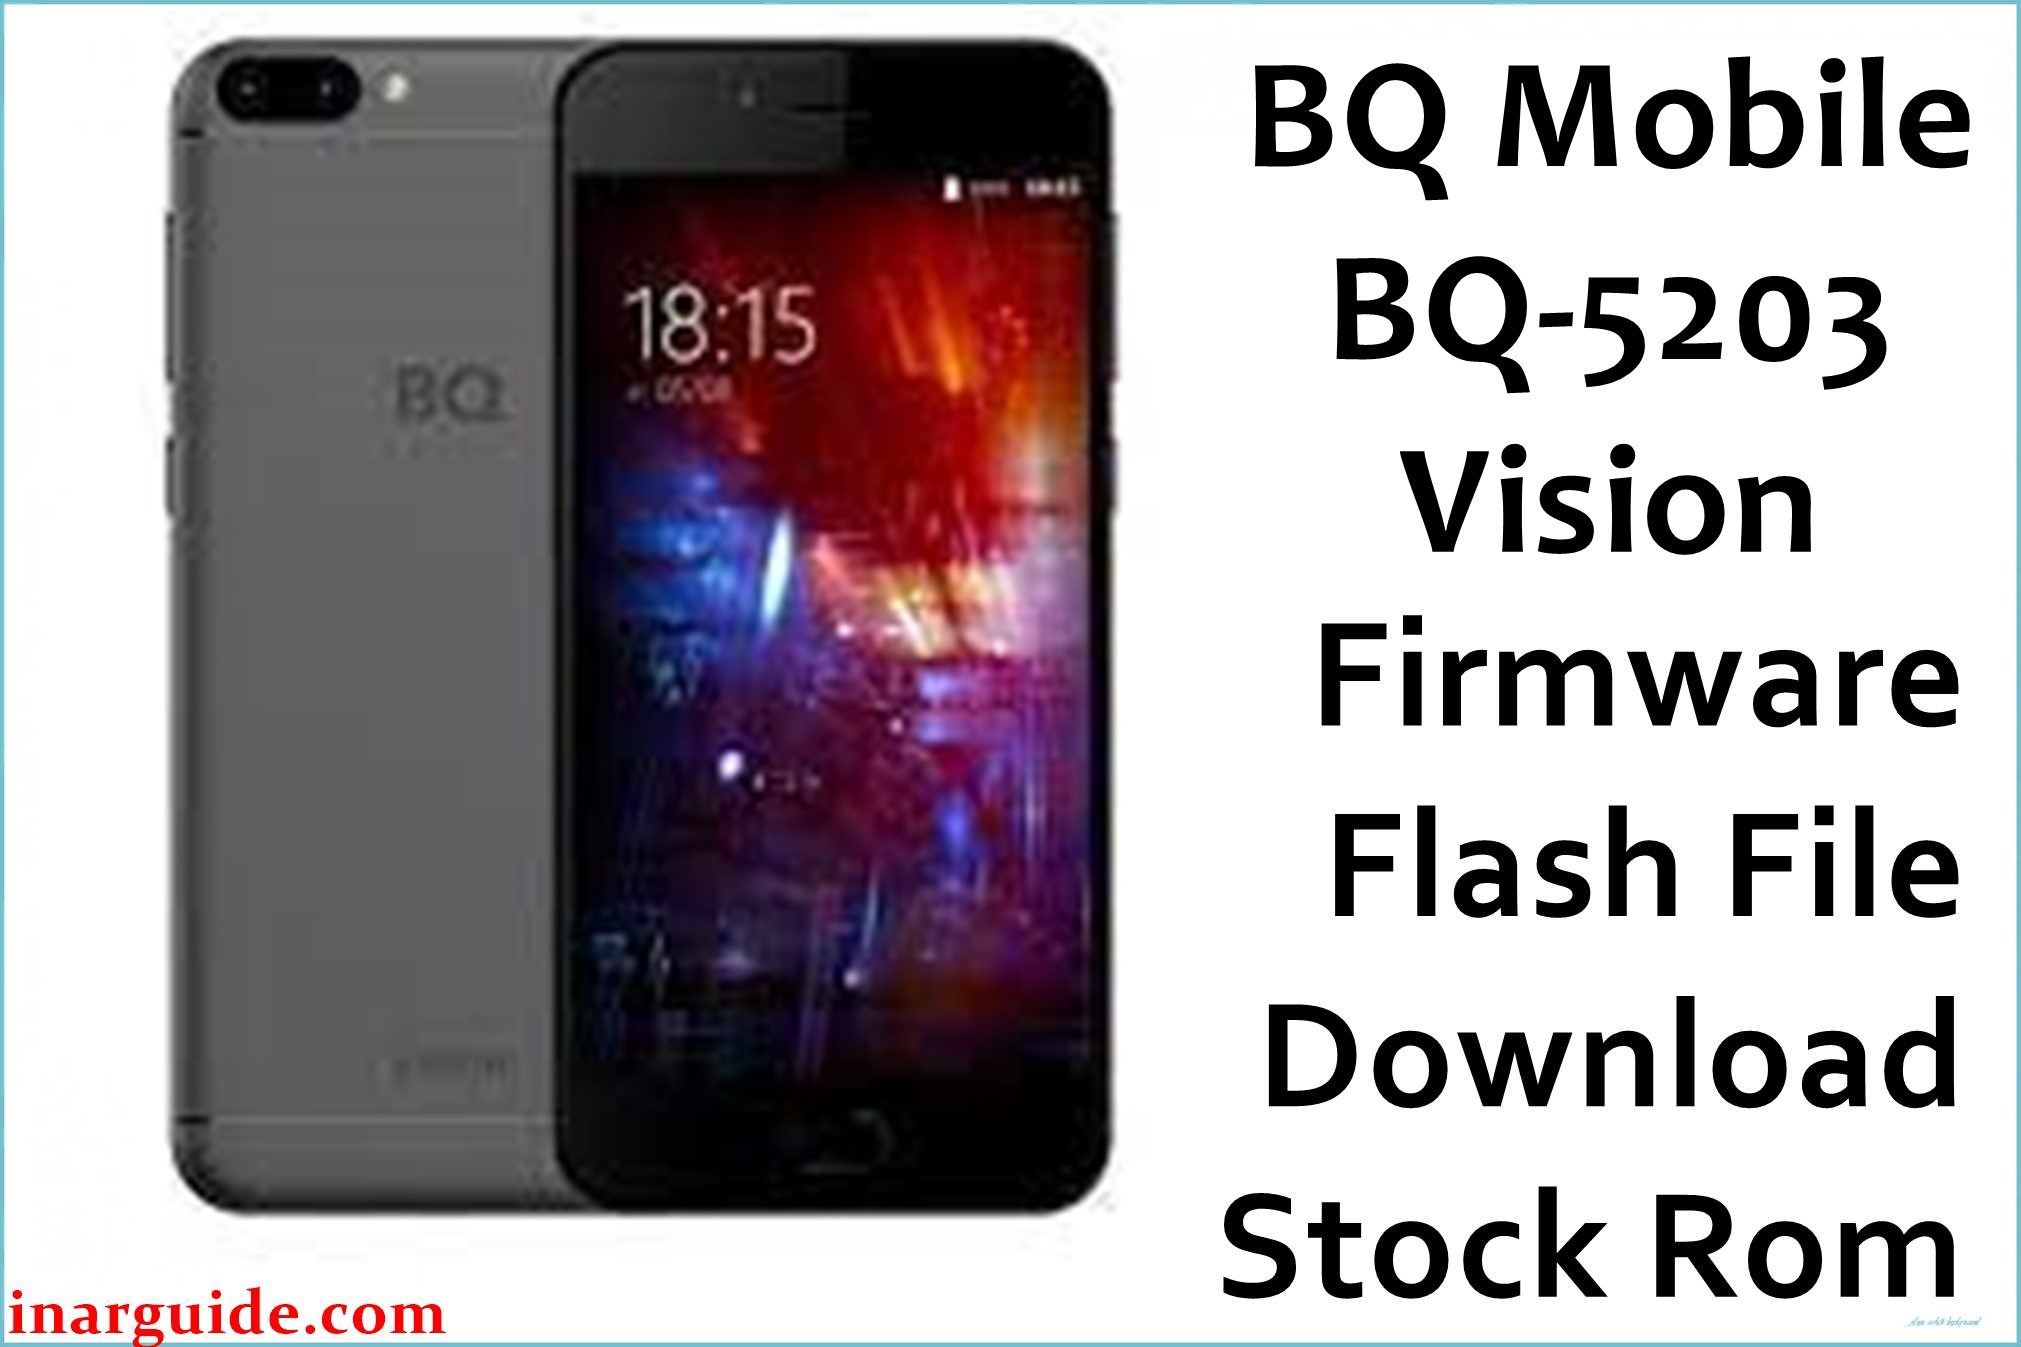 BQ Mobile BQ 5203 Vision